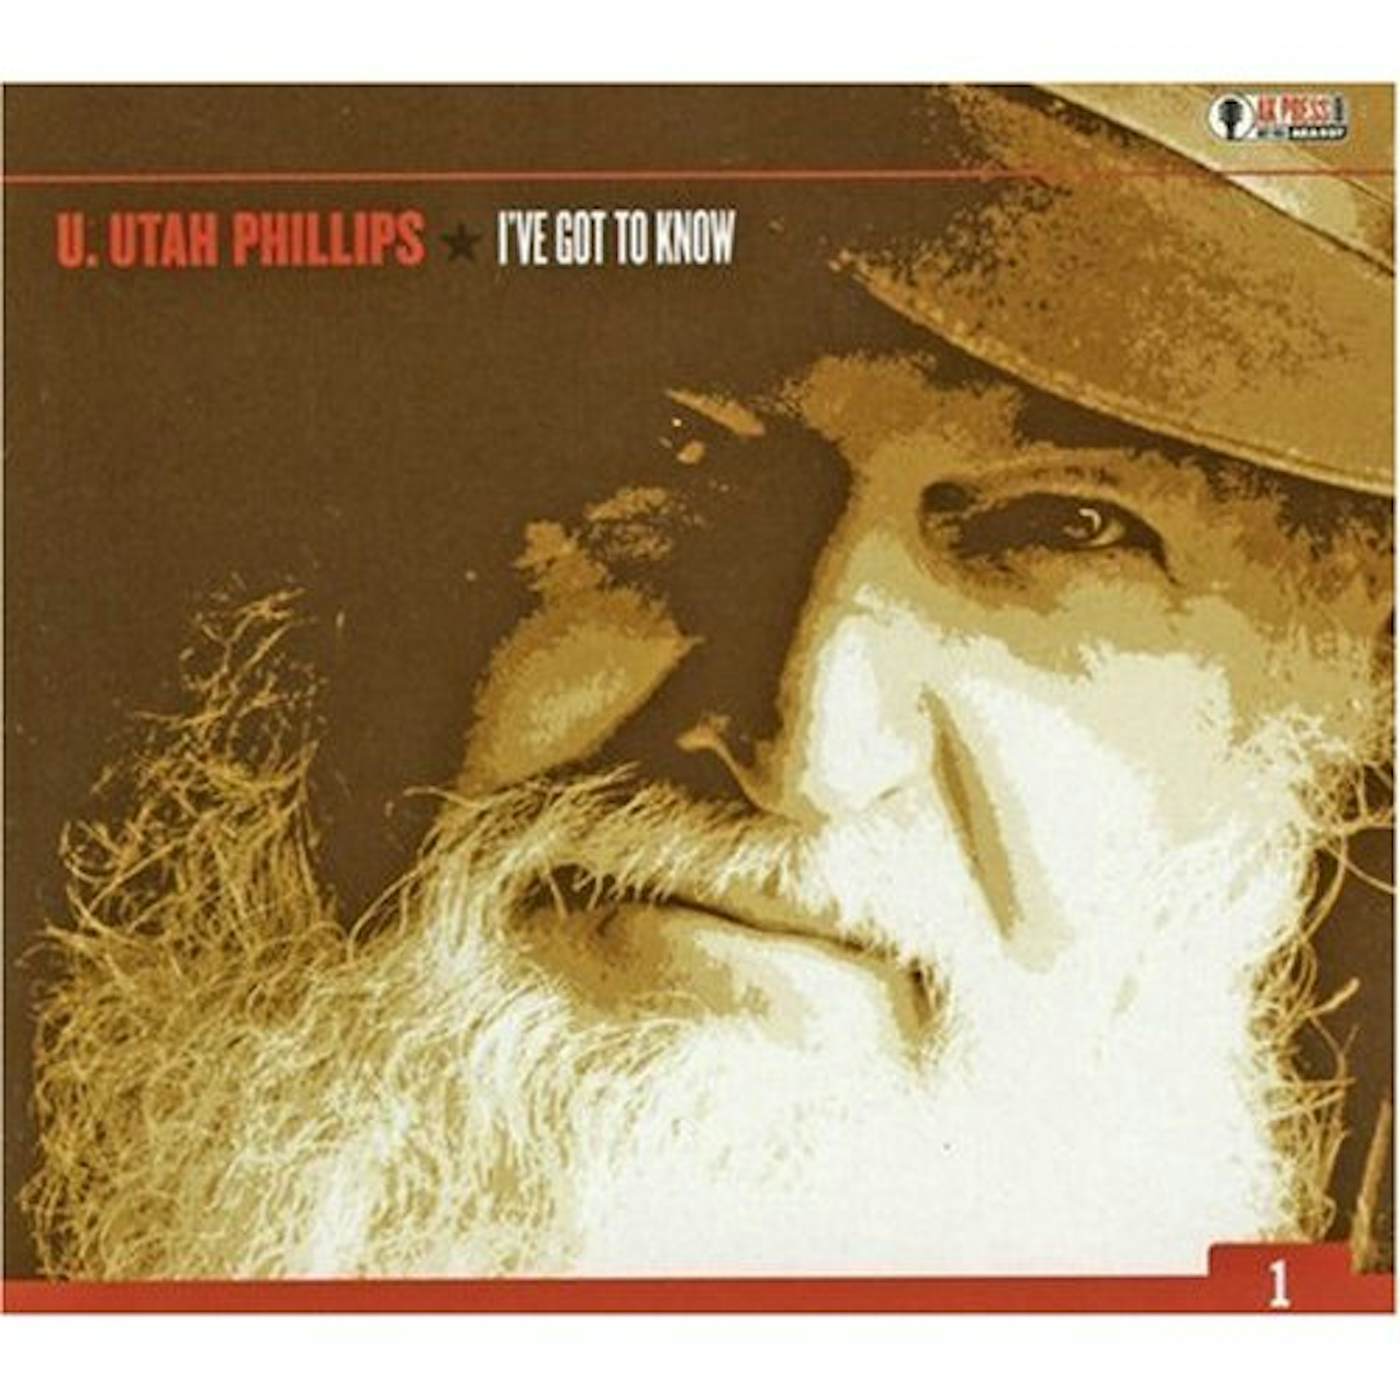 Utah Phillips I'VE GOT TO KNOW CD